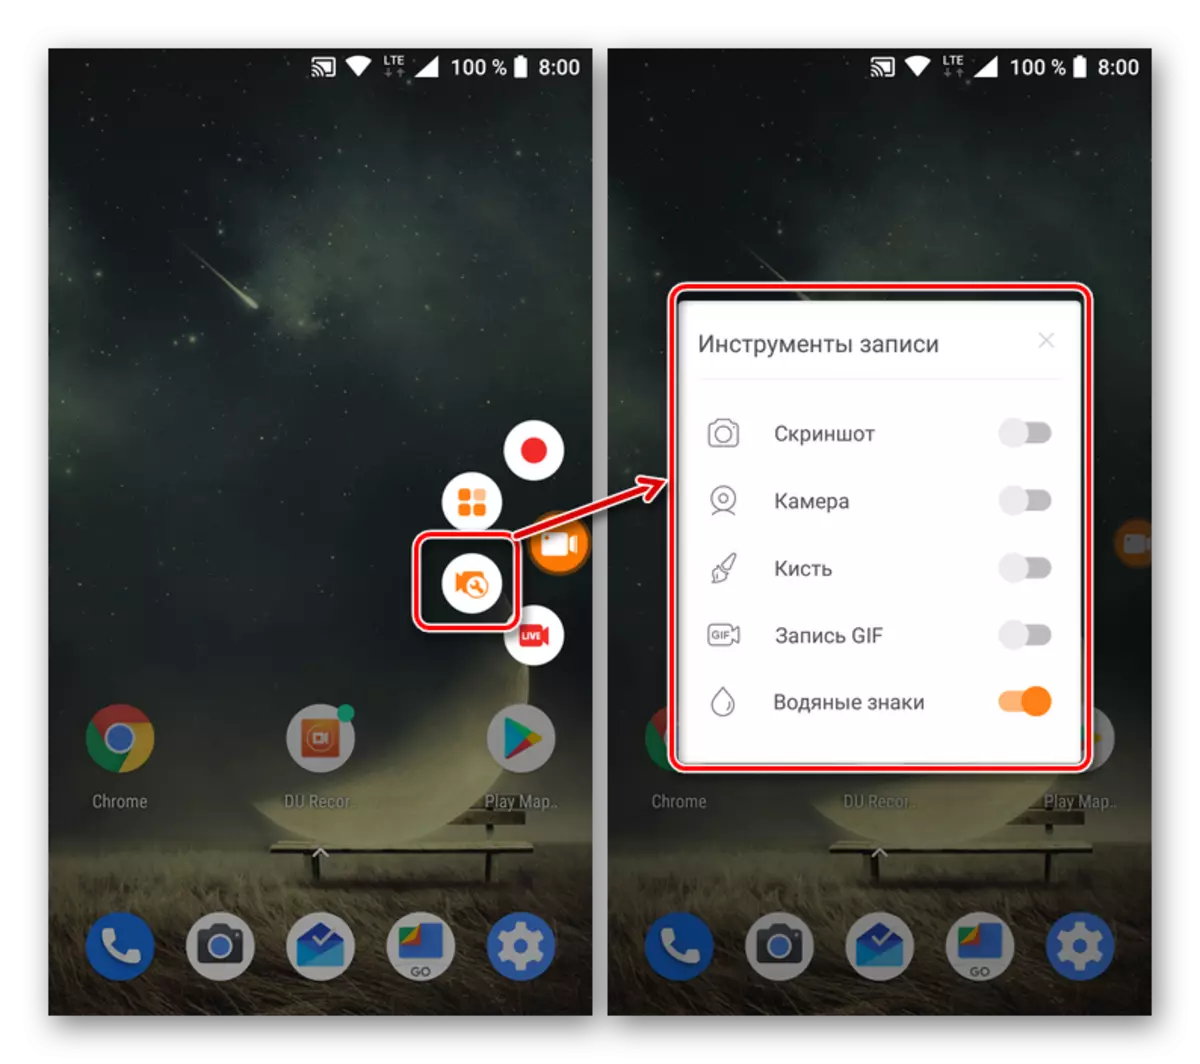 Android కోసం DU రికార్డర్ అప్లికేషన్ లో ఫ్లోటింగ్ బటన్ యొక్క పారామితులు మెనుని చేస్తోంది